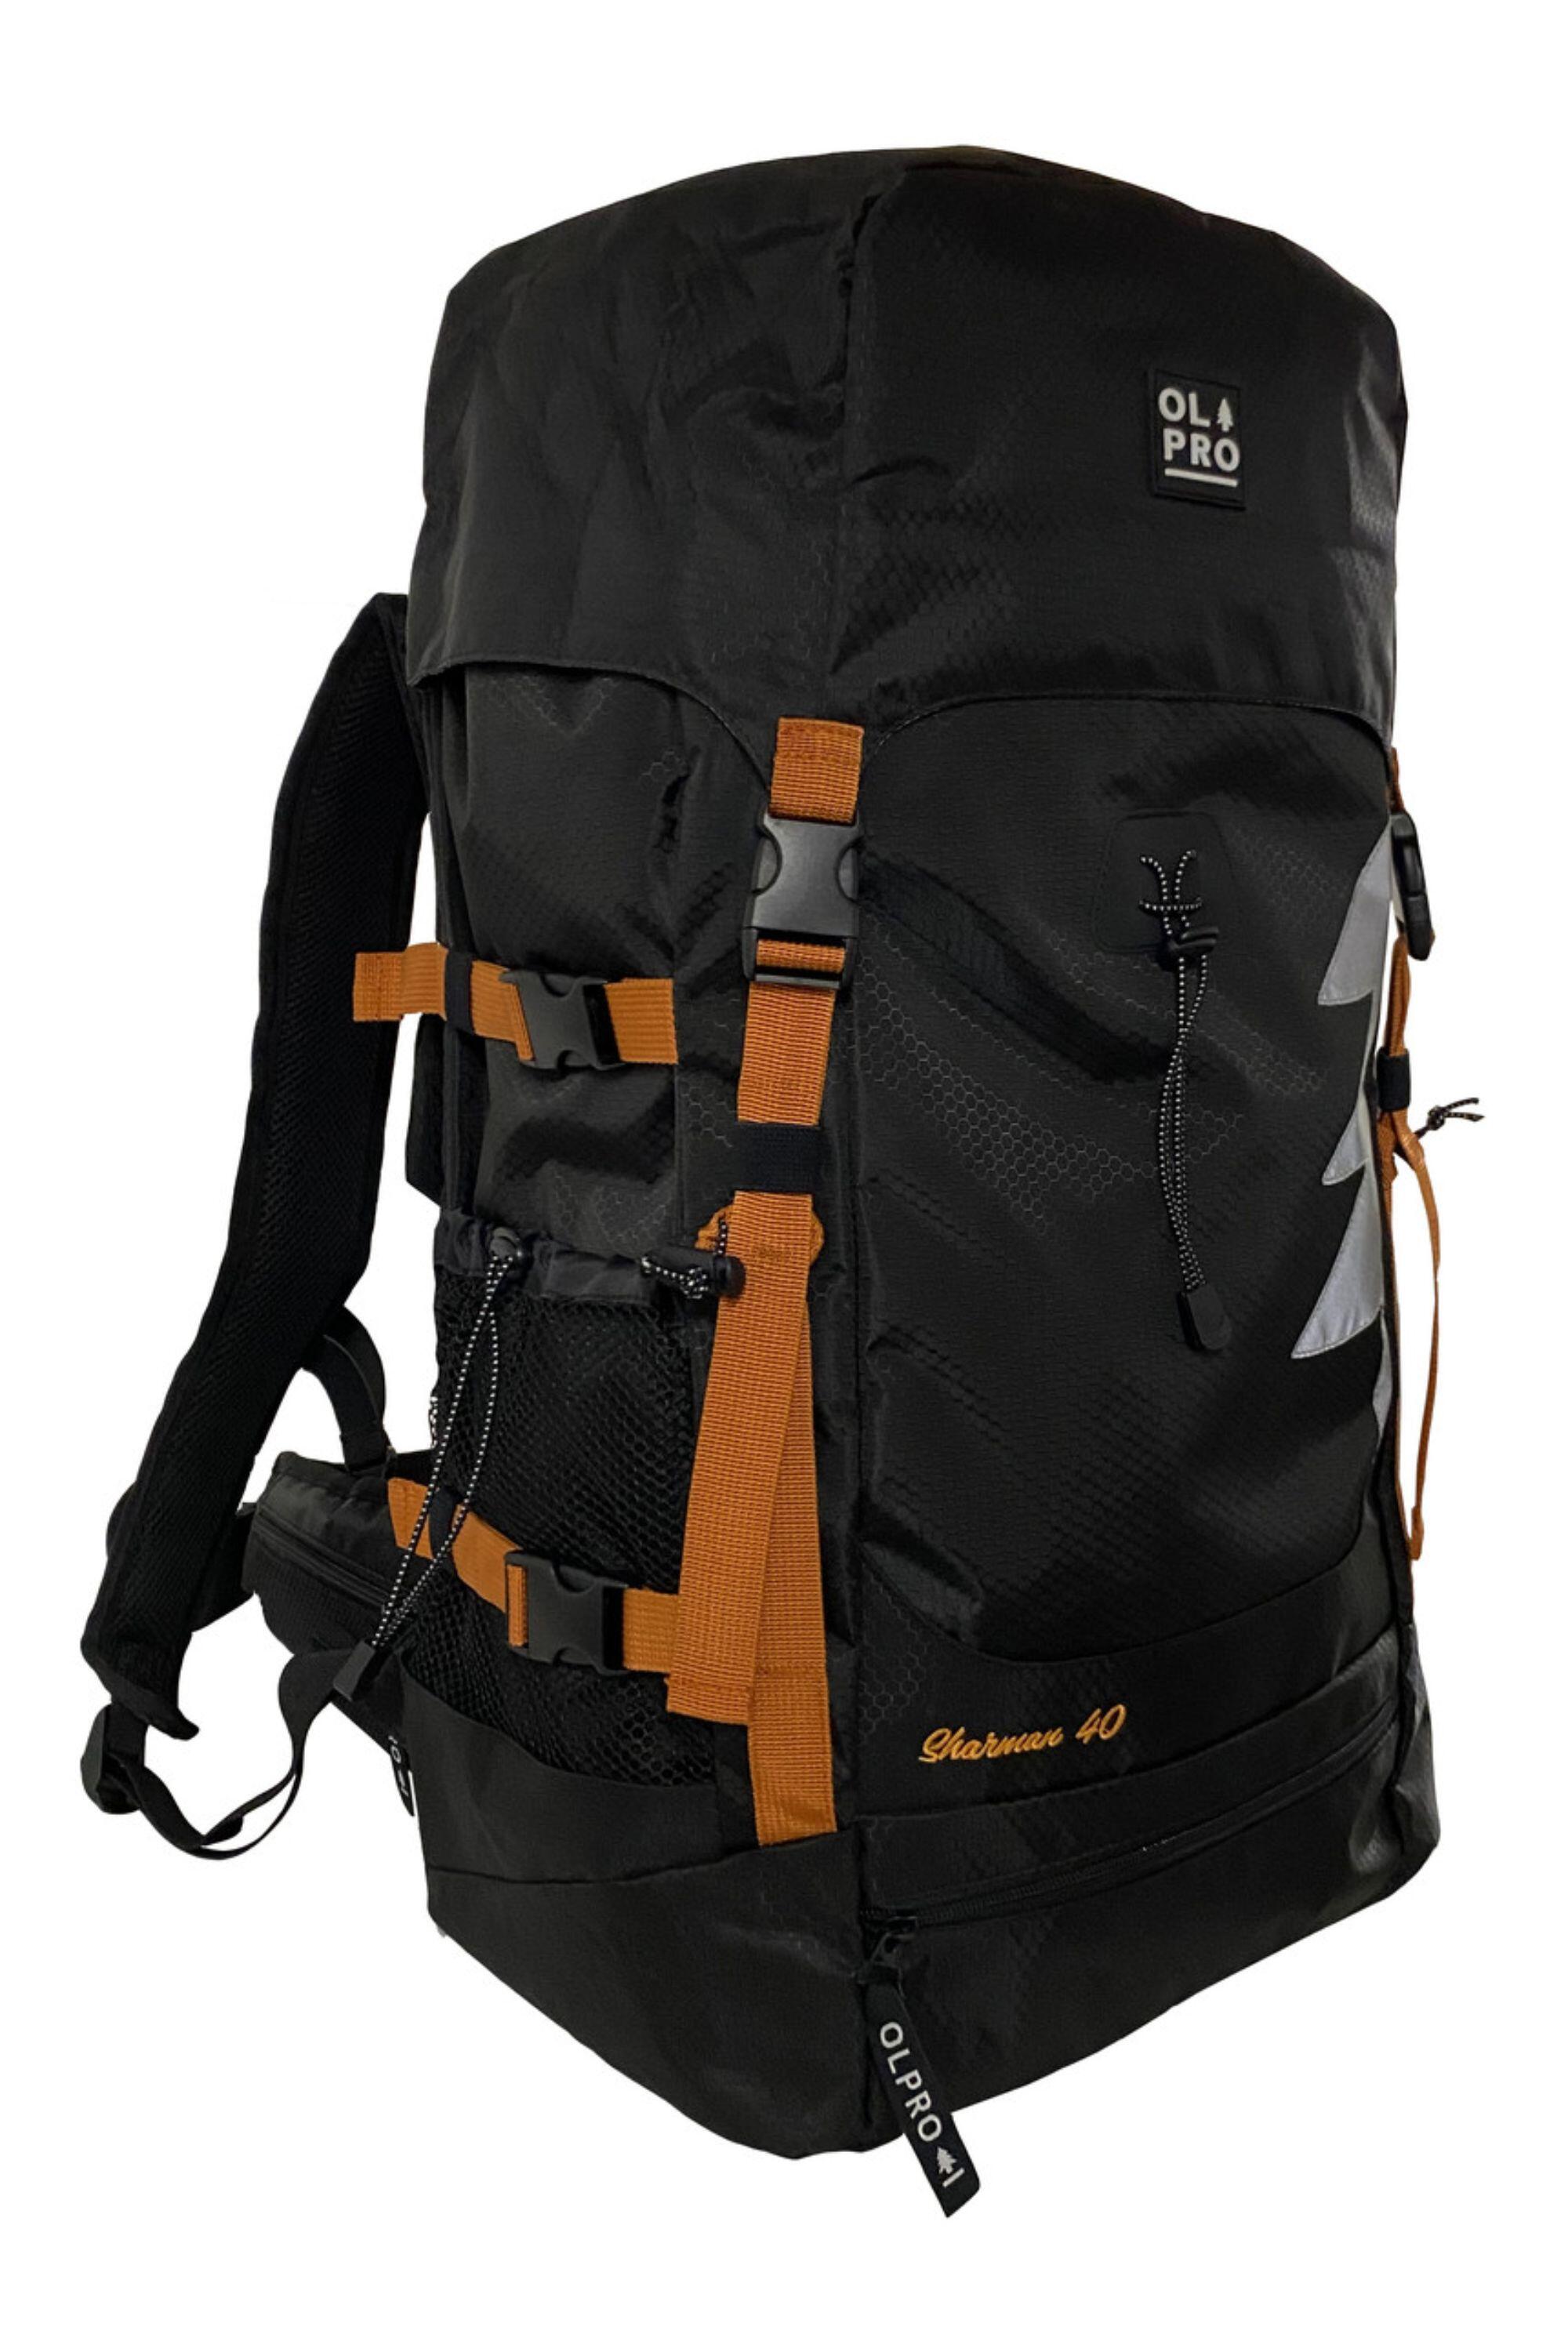 OLPRO 40L Rucksack Bag Black 1/4